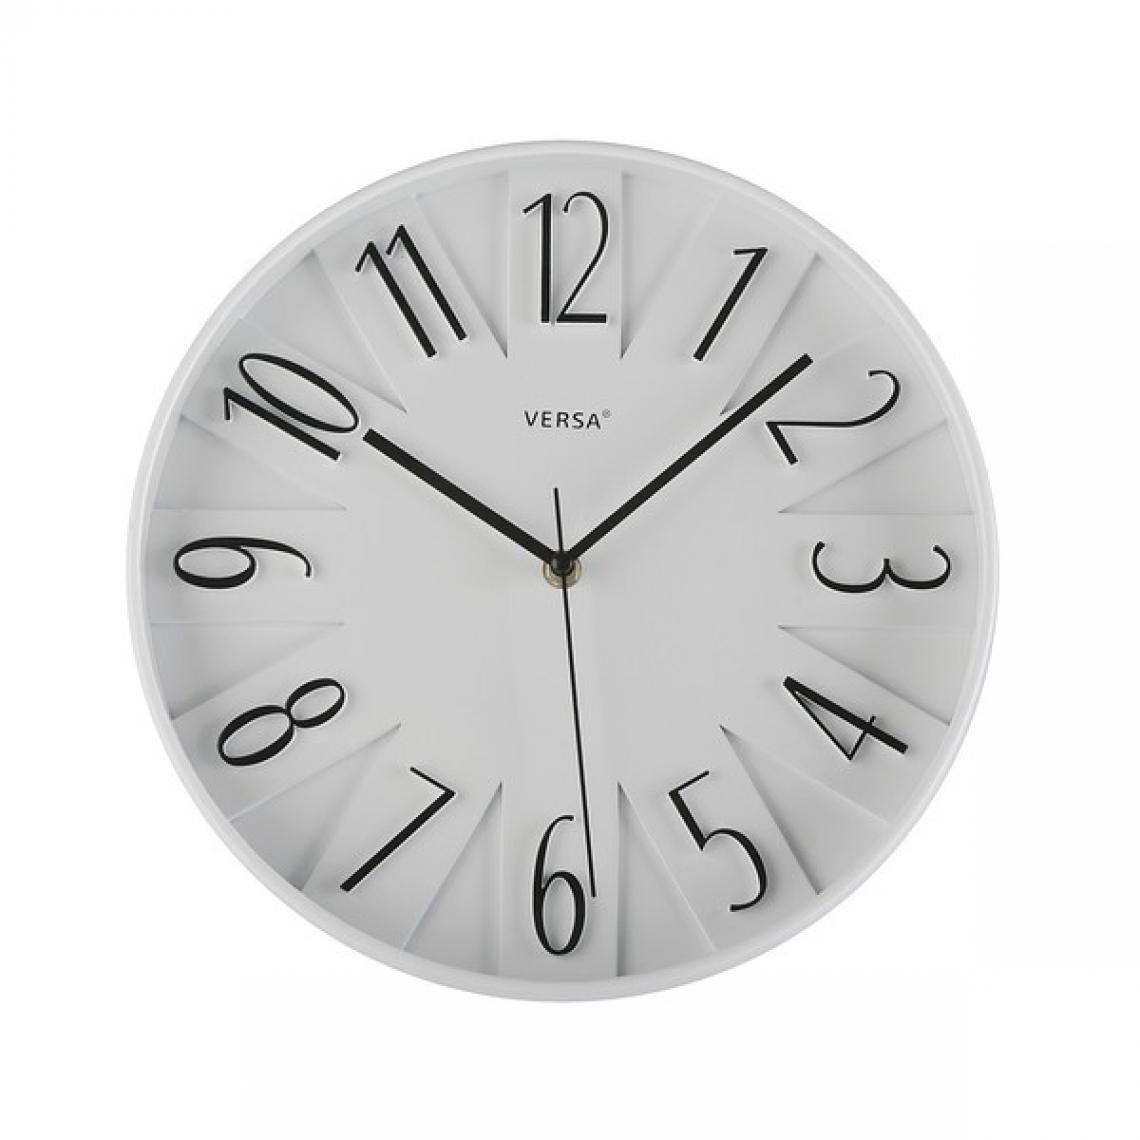 Unknown - Horloge Murale (Ø 30 cm) Plastique (4 x 30 x 30 cm) - Horloges, pendules